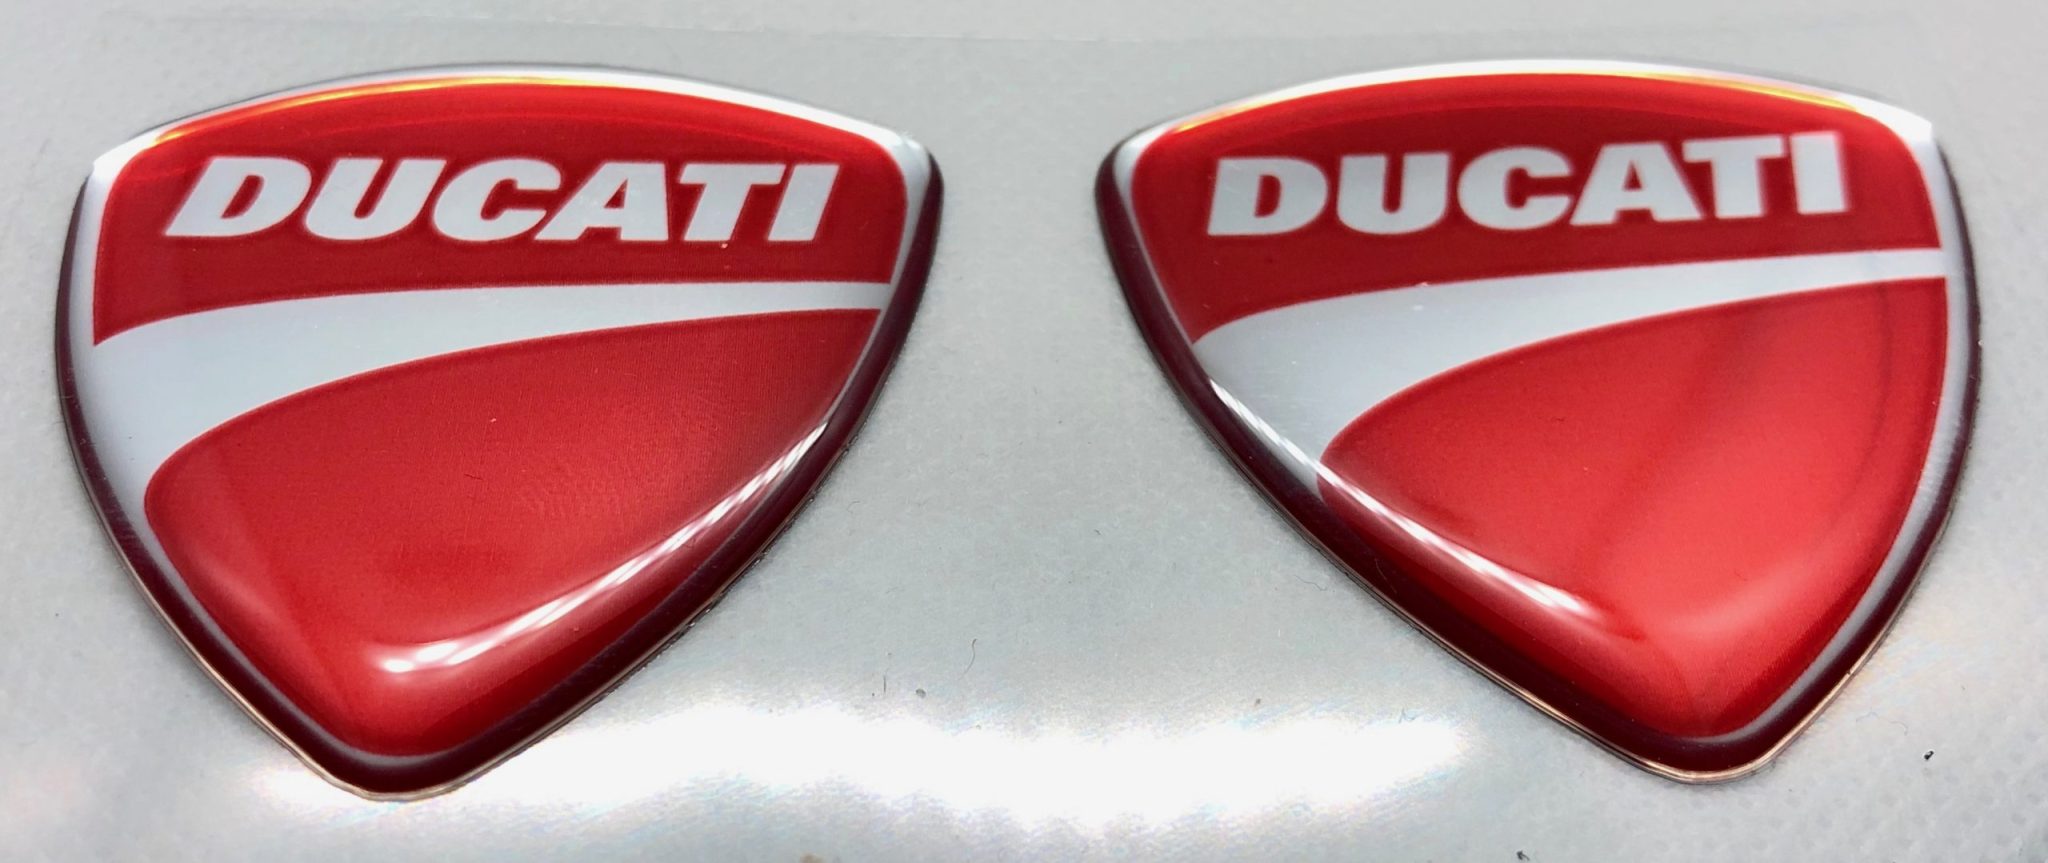 3D Ducati logo sticker (Silver red)